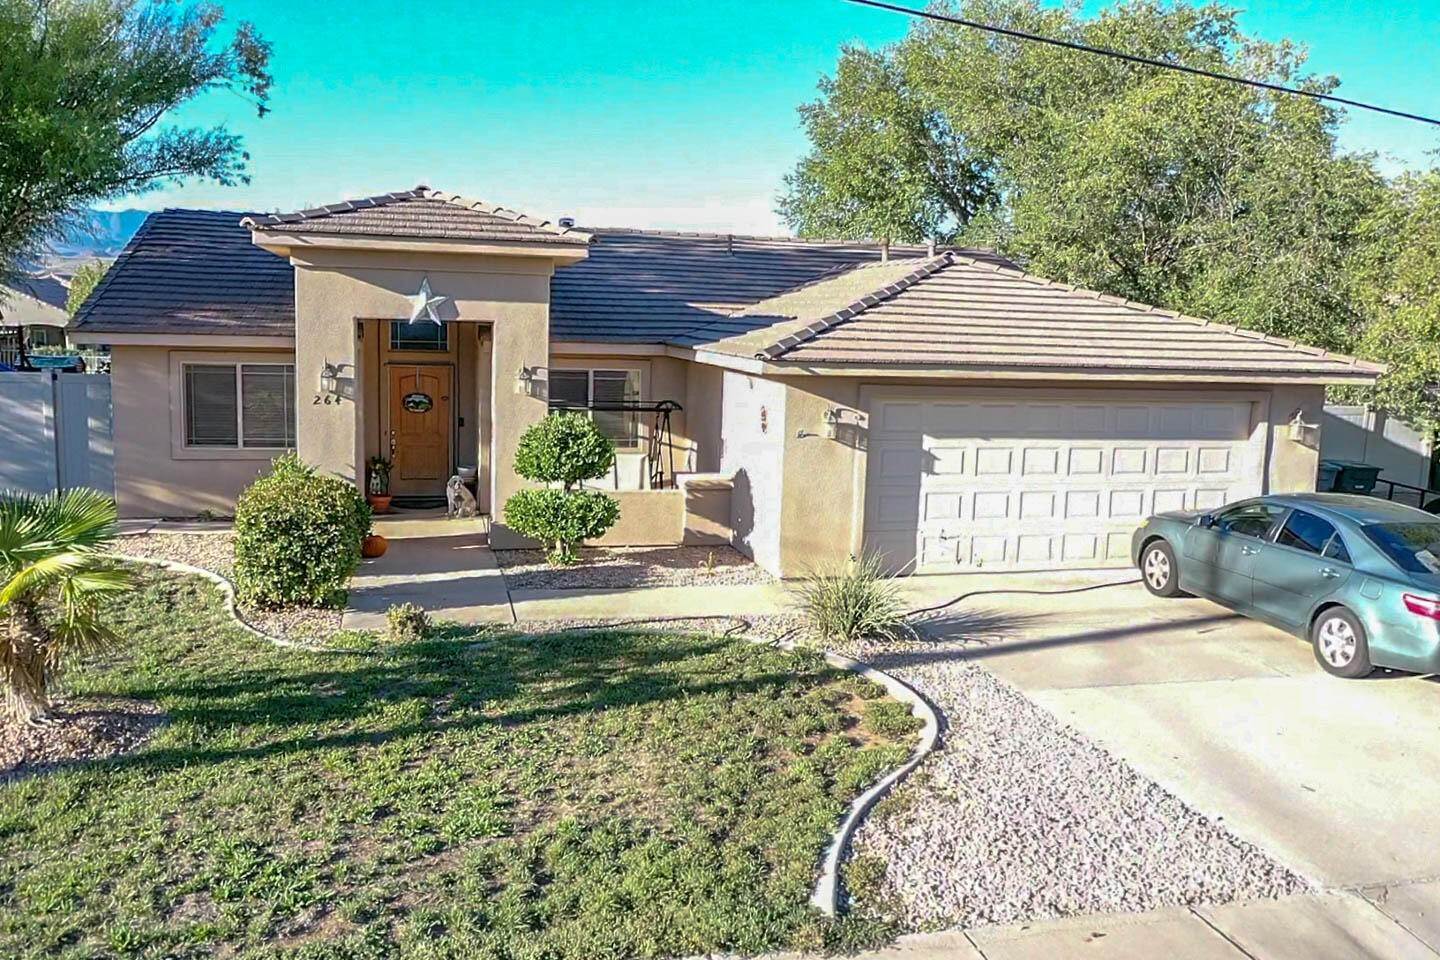 2. Single Family Homes for Sale at 264 600 La Verkin, Utah 84745 United States